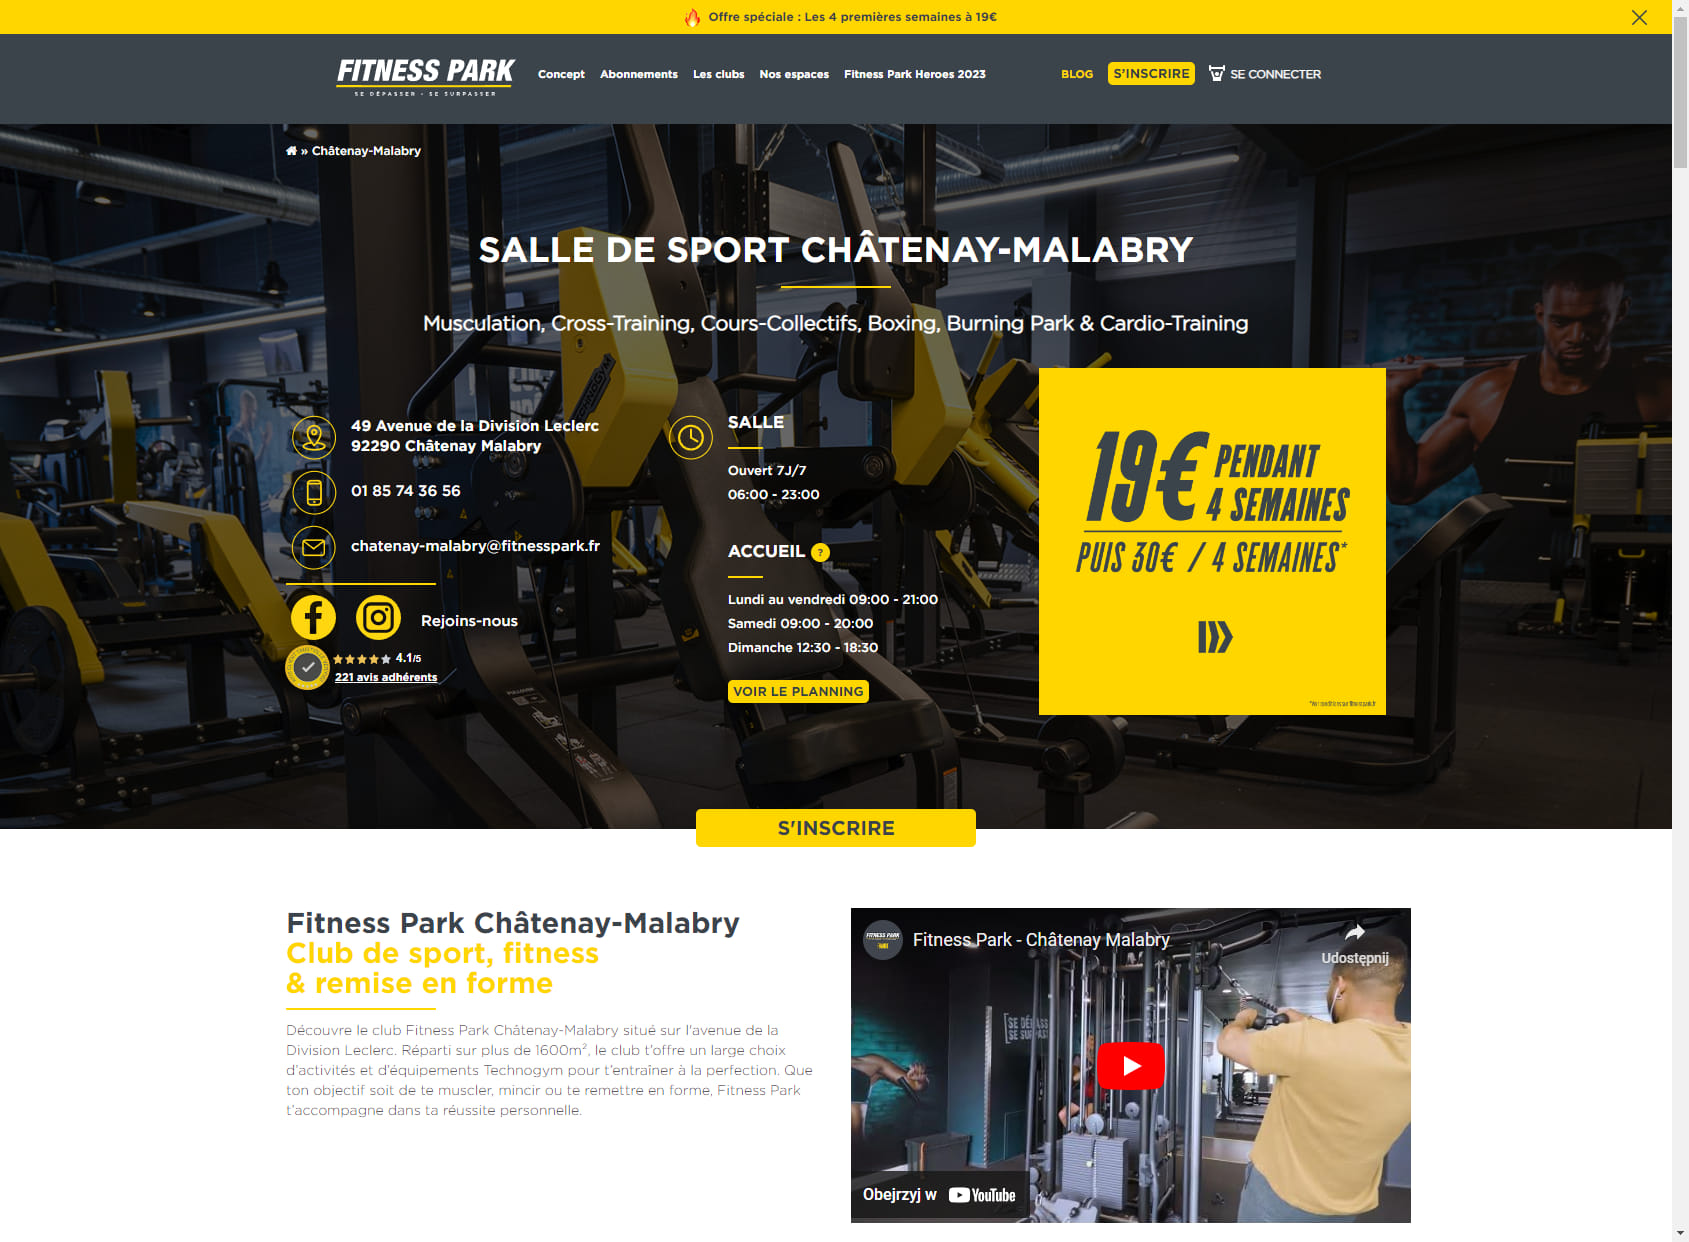 Salle de sport Châtenay-Malabry - Fitness Park